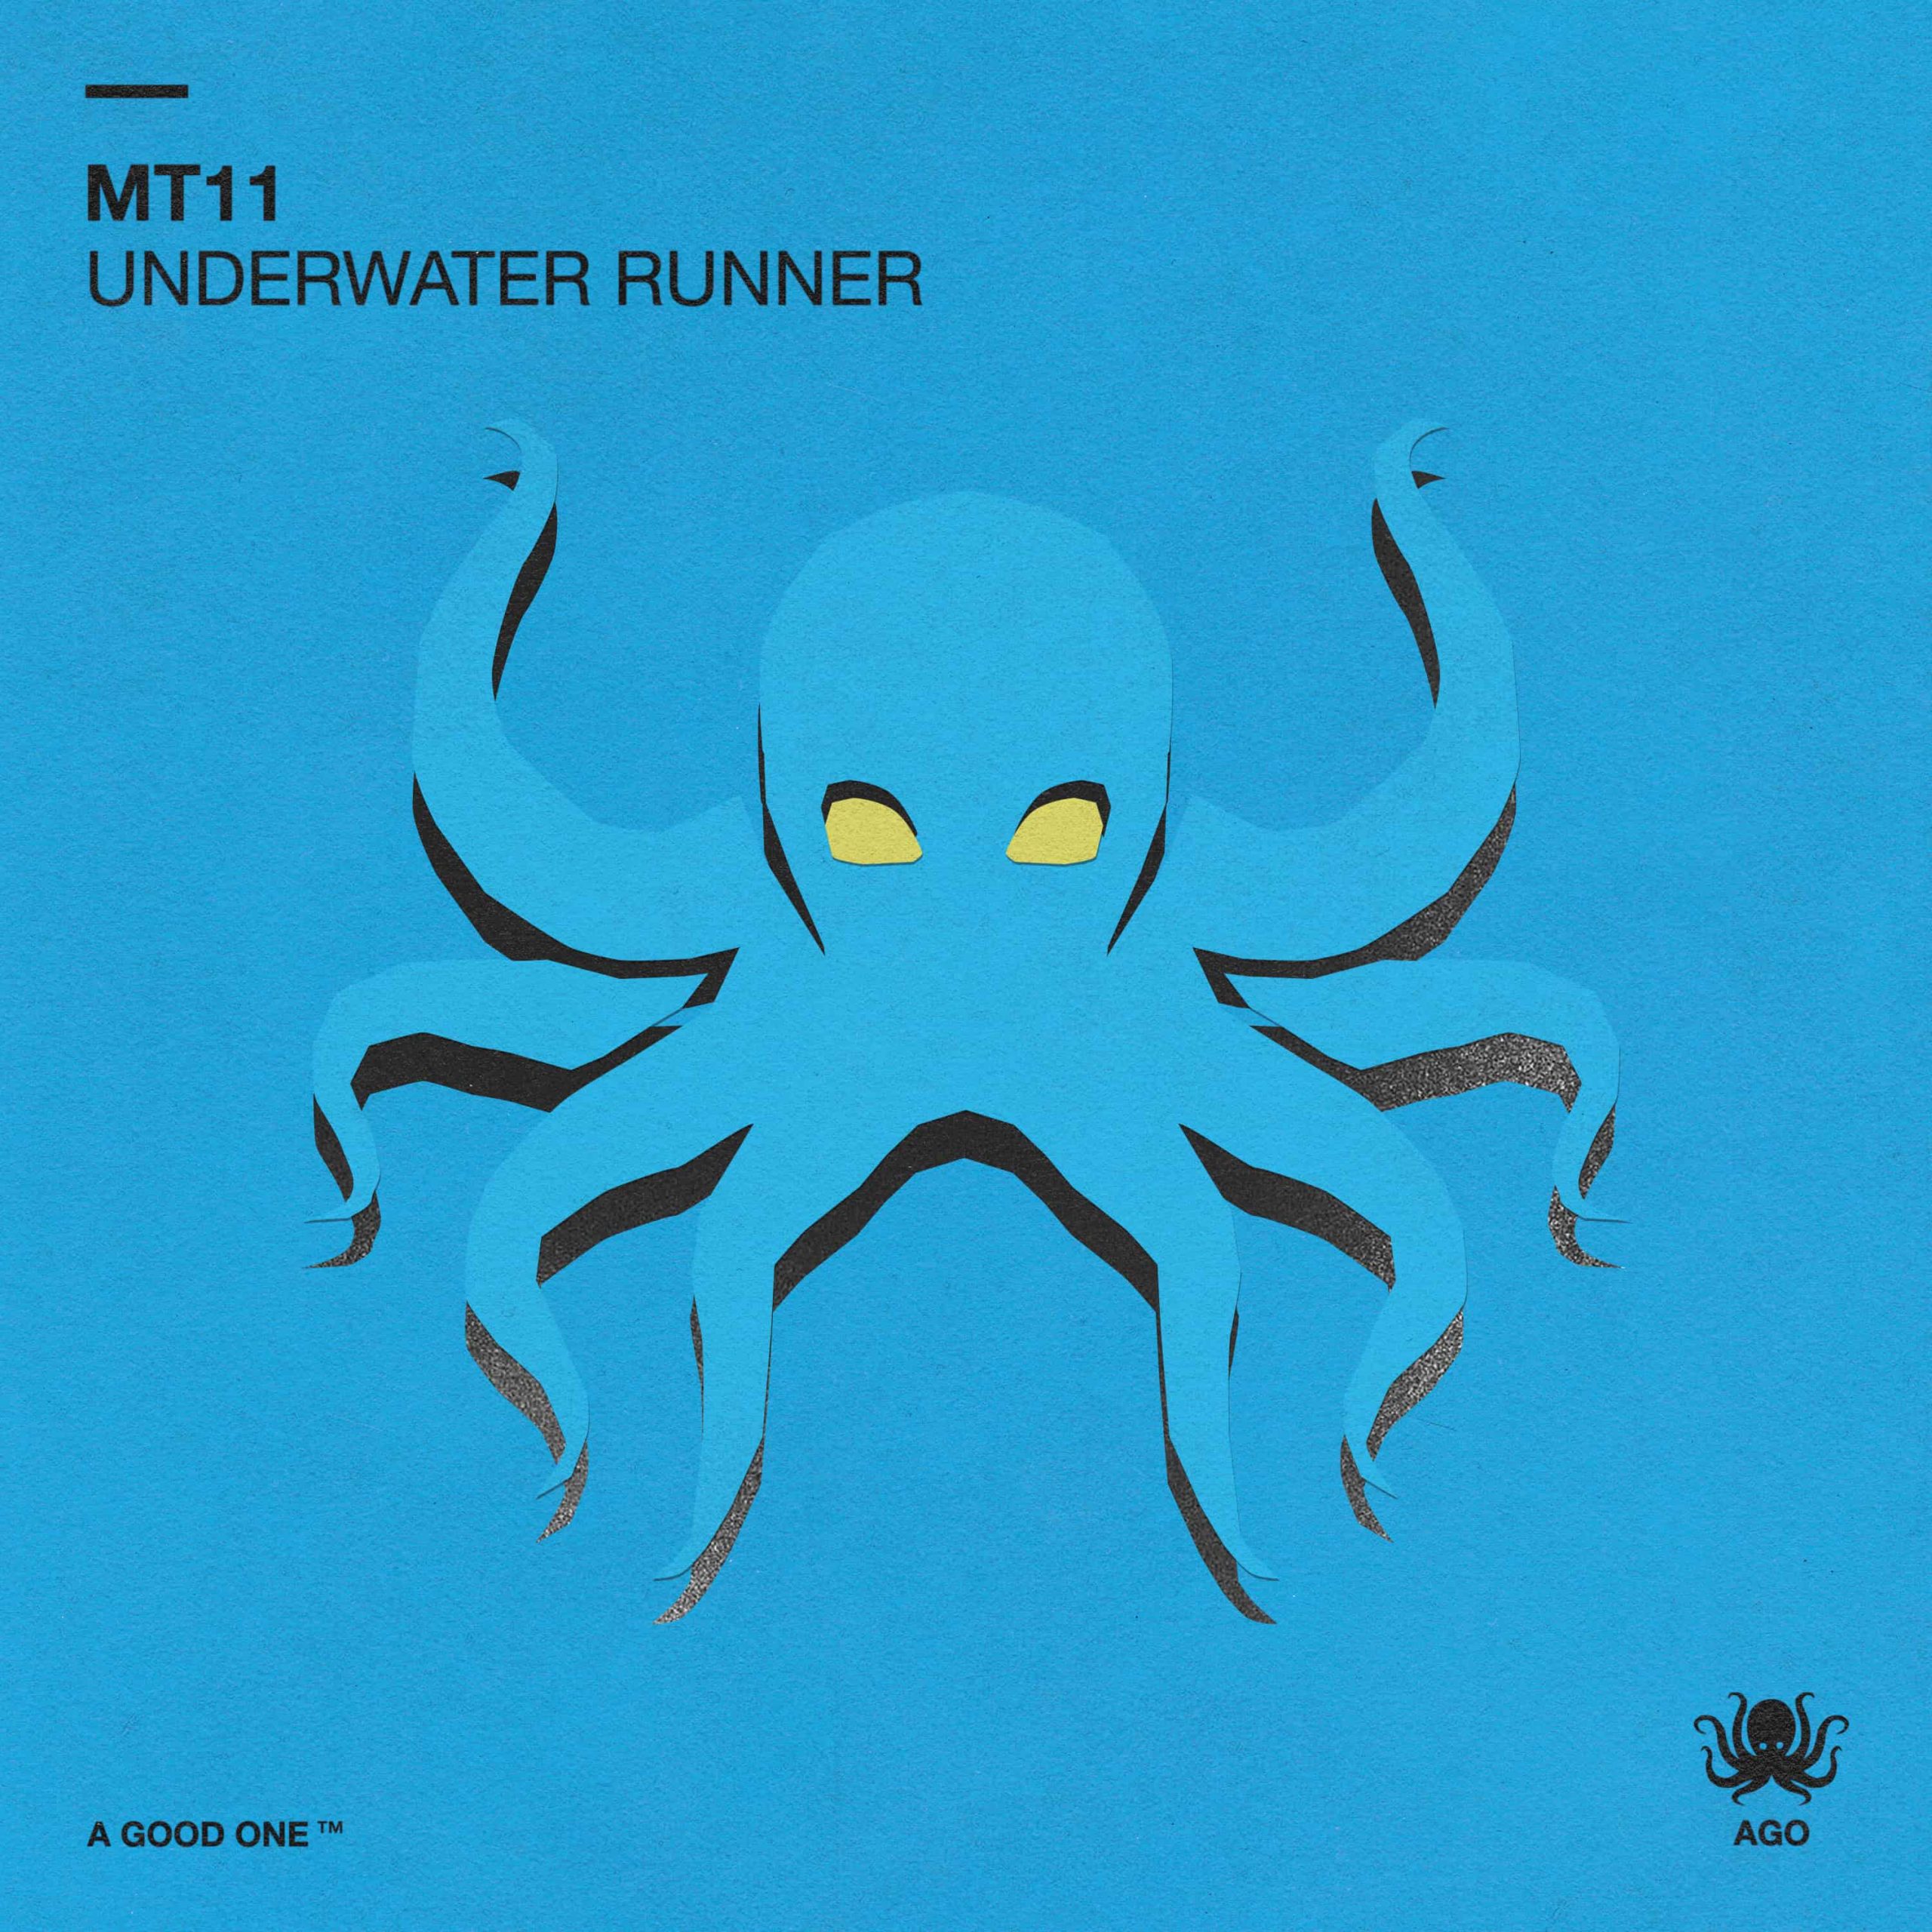 MT11 release tech-house single ‘Underwater Runner’: Listen